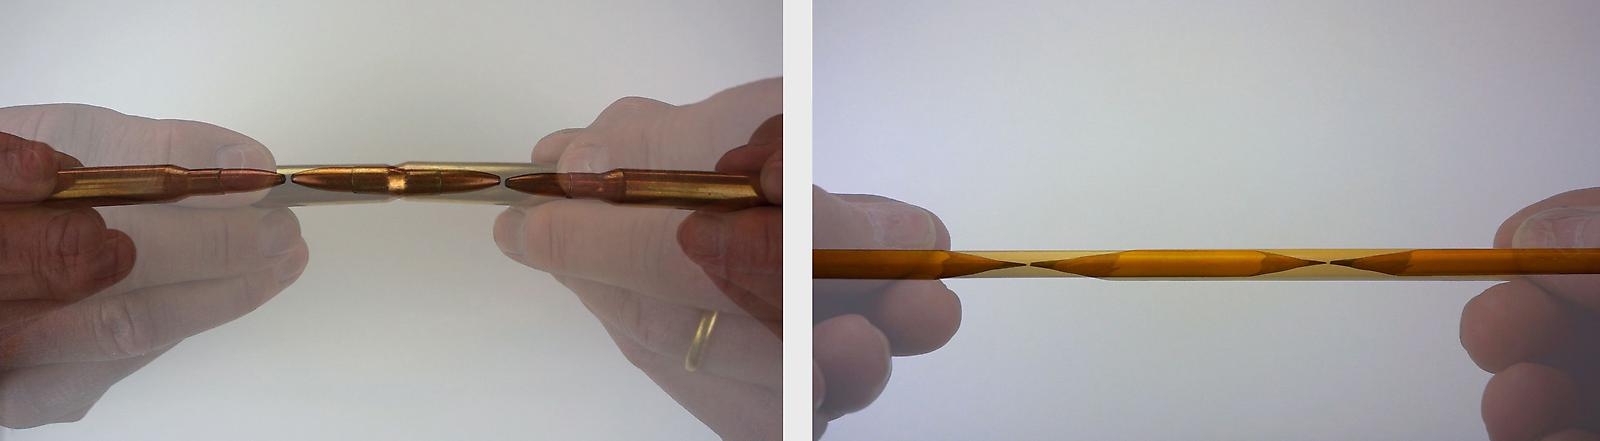 Bruce Nauman Bullet Illusion/Pencil Illusion, 2013